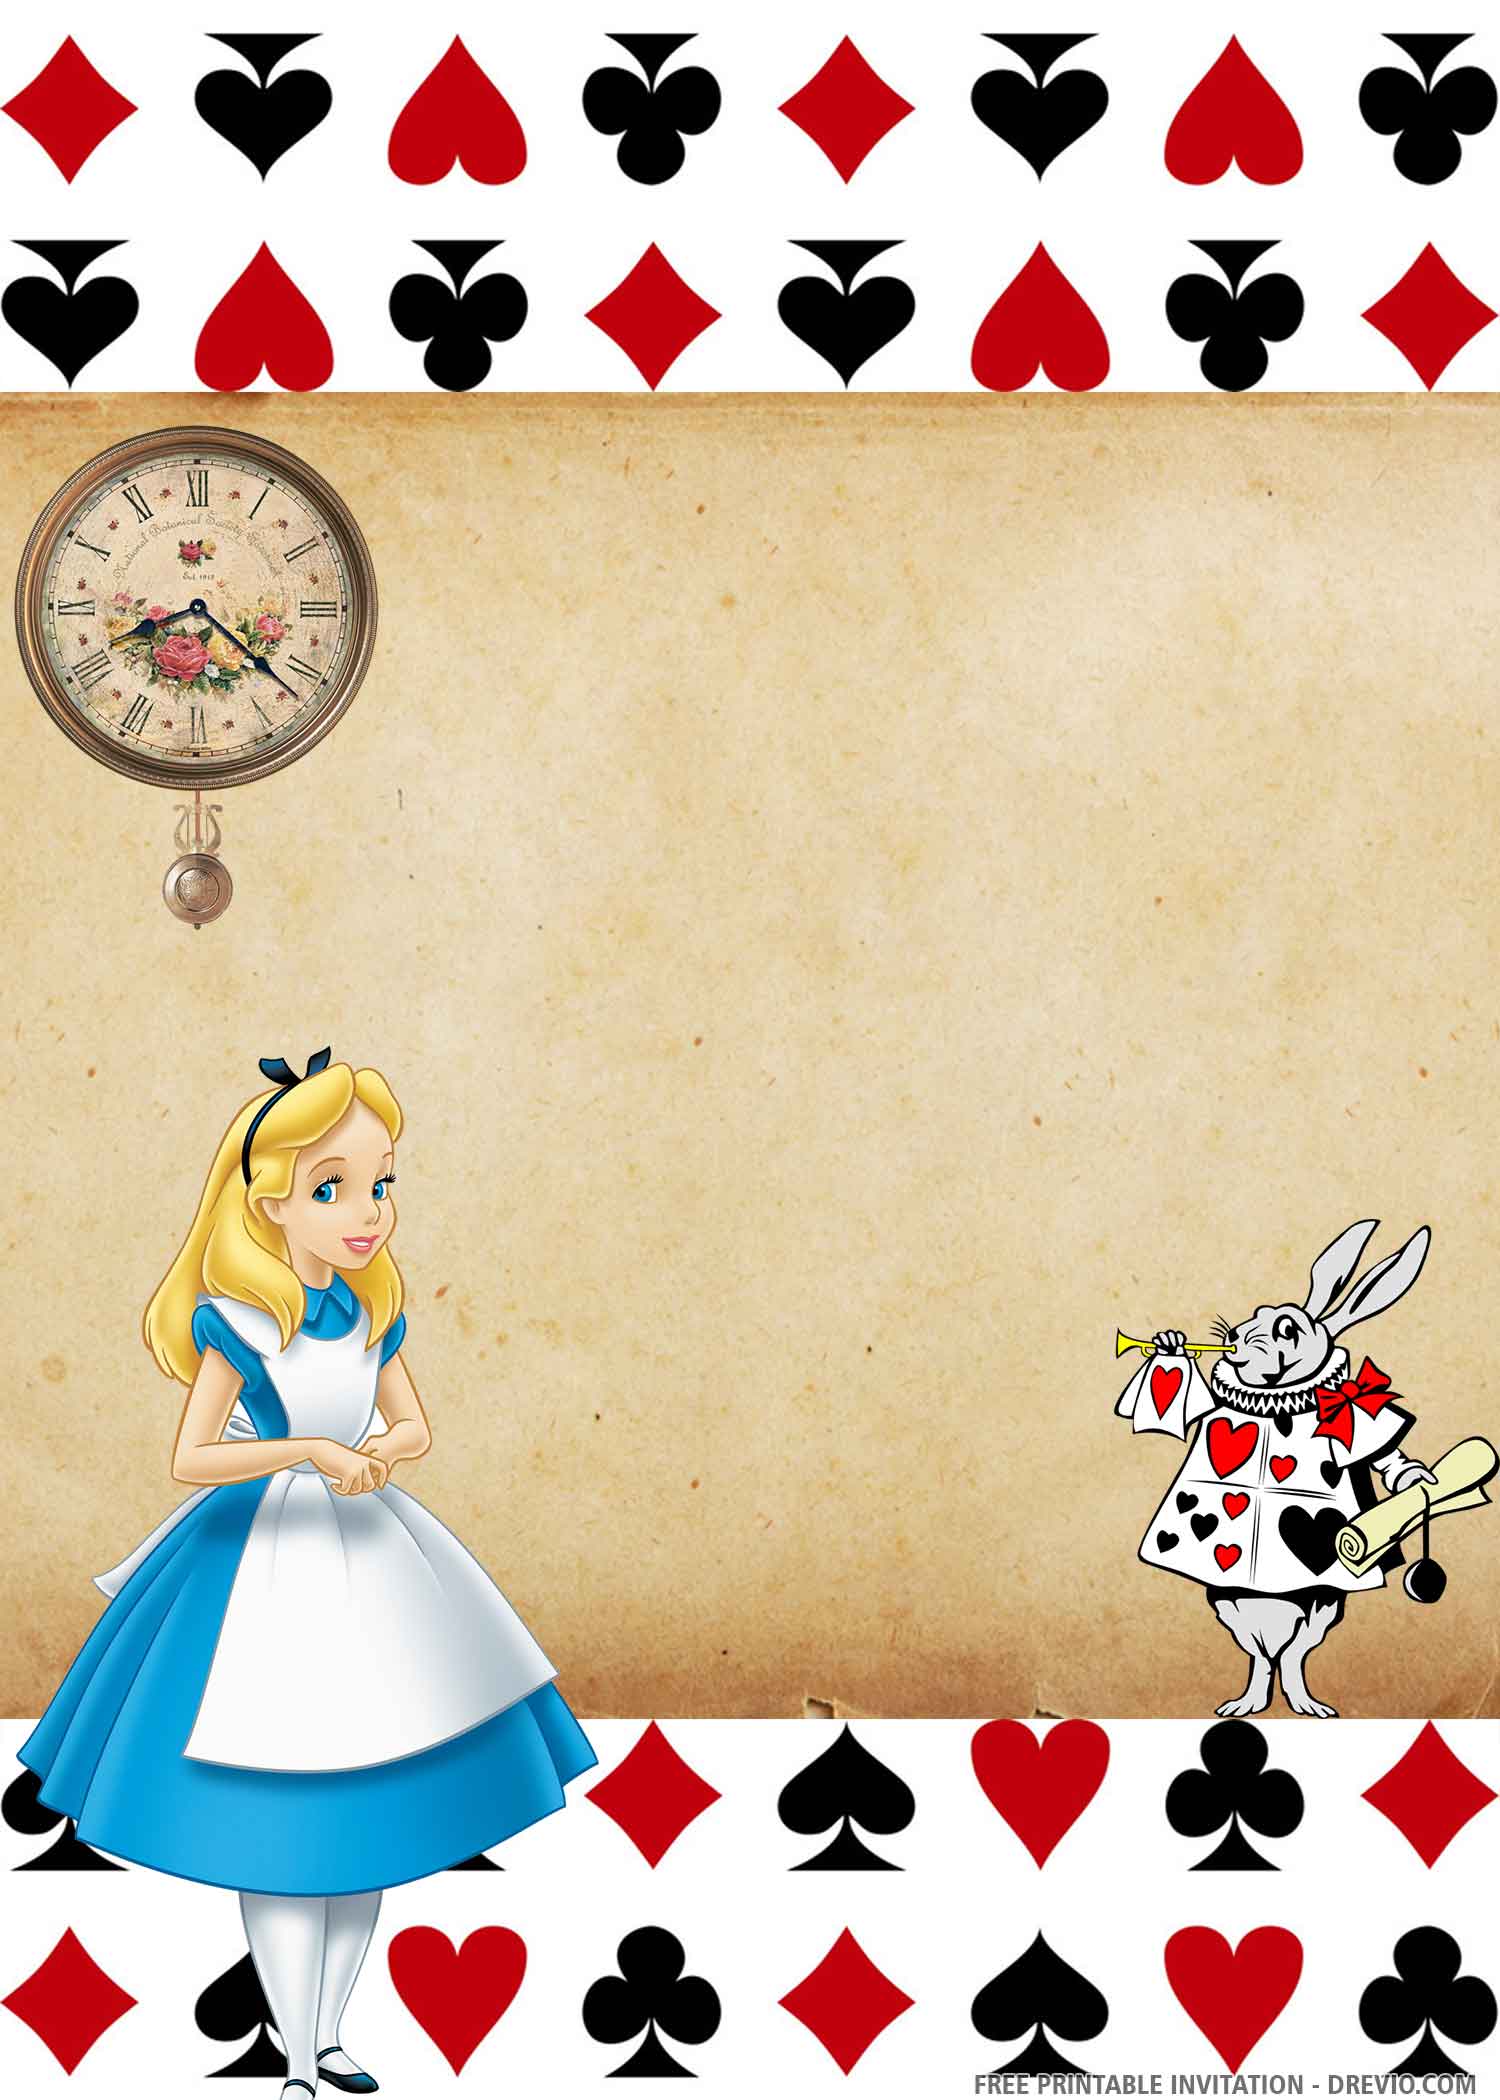 FREE PRINTABLE) – Alice in the Wonderland Birthday Invitation